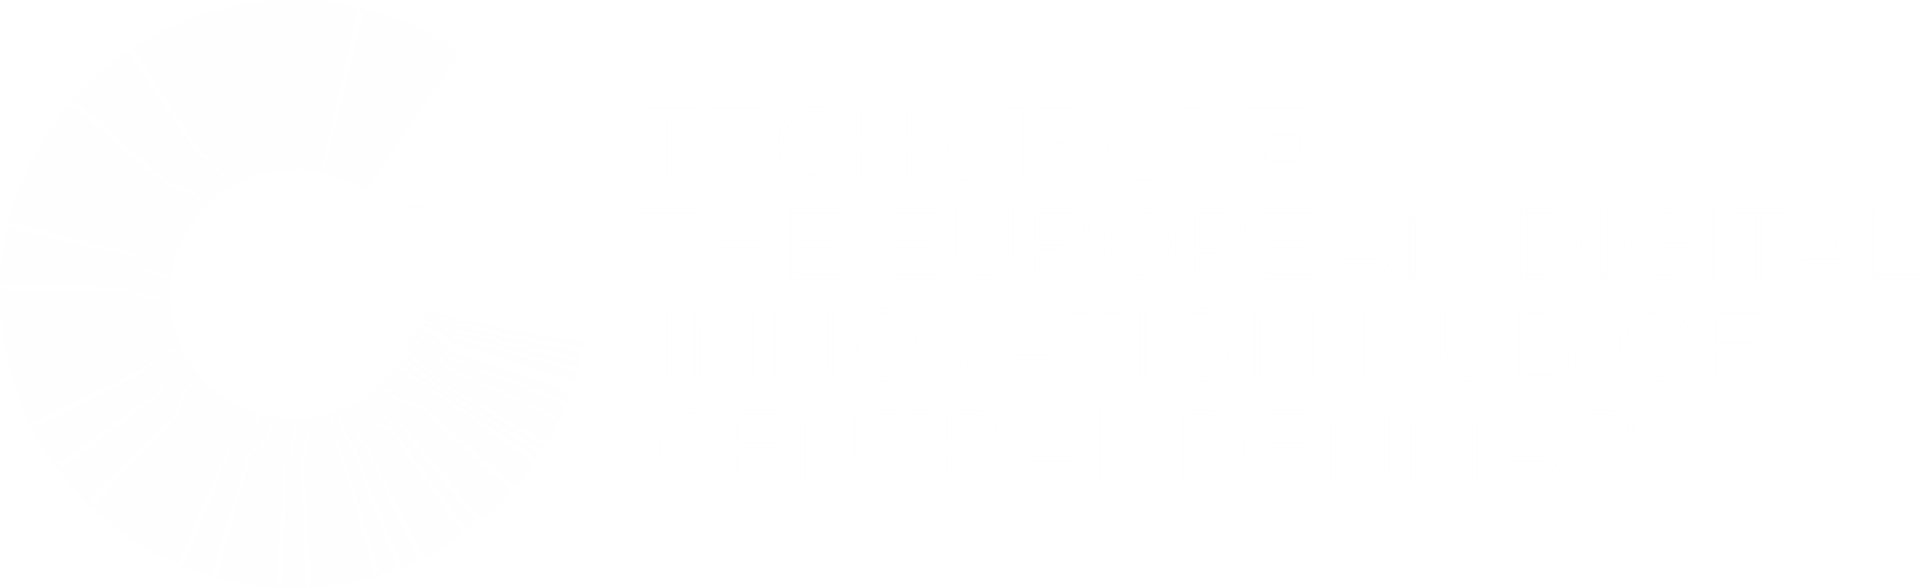 TechCircle the european digital innovation hub of Central Denmark